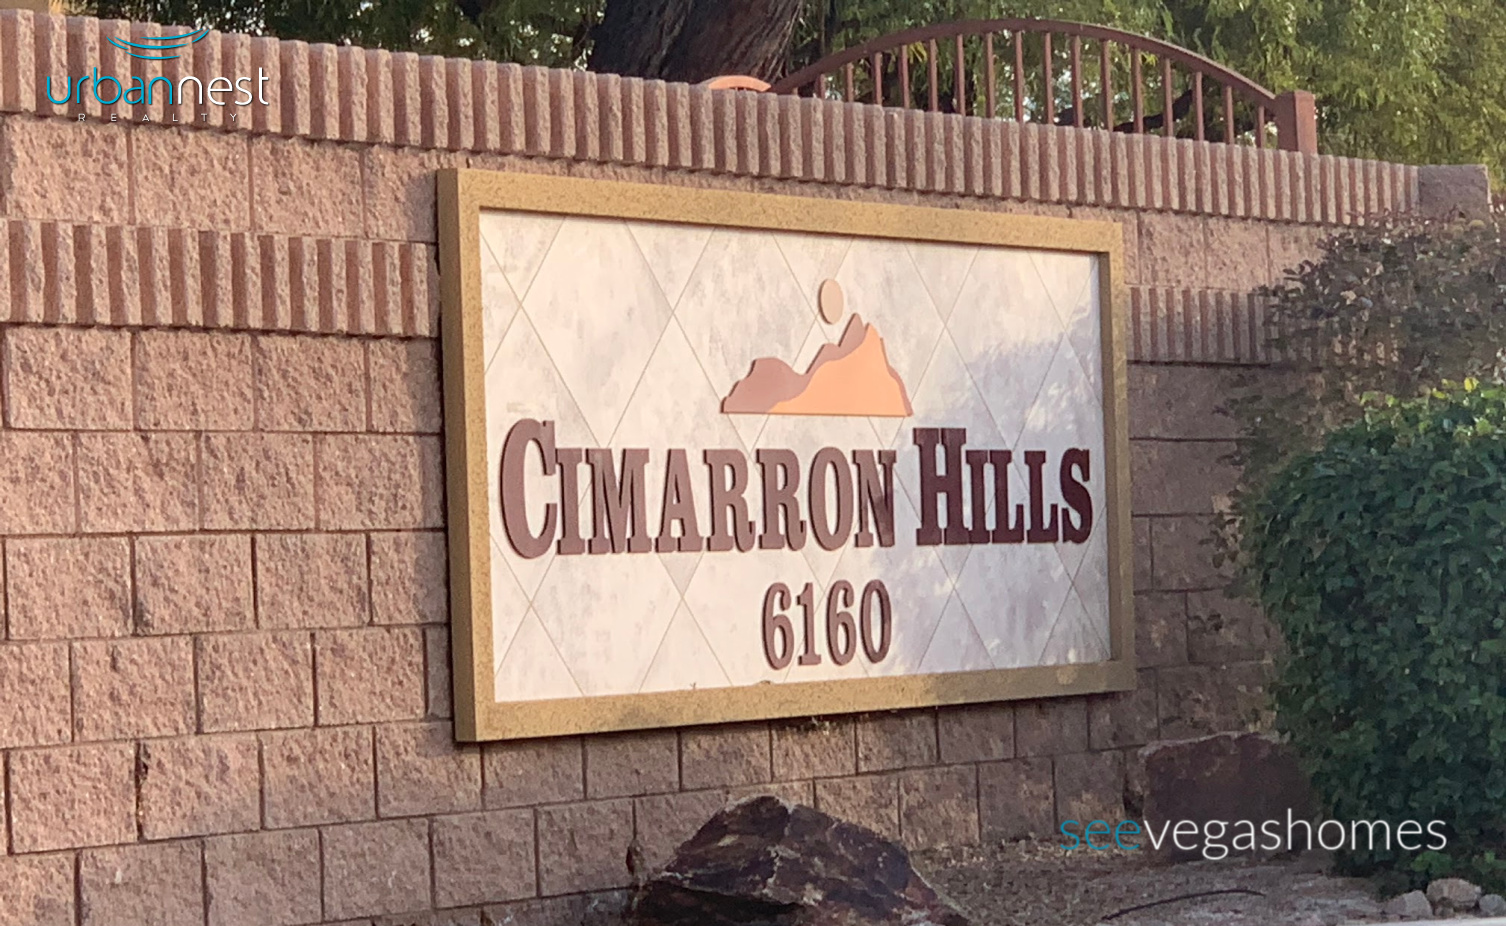 Cimarron Hills Condos Las Vegas 89113 SeeVegasHomes